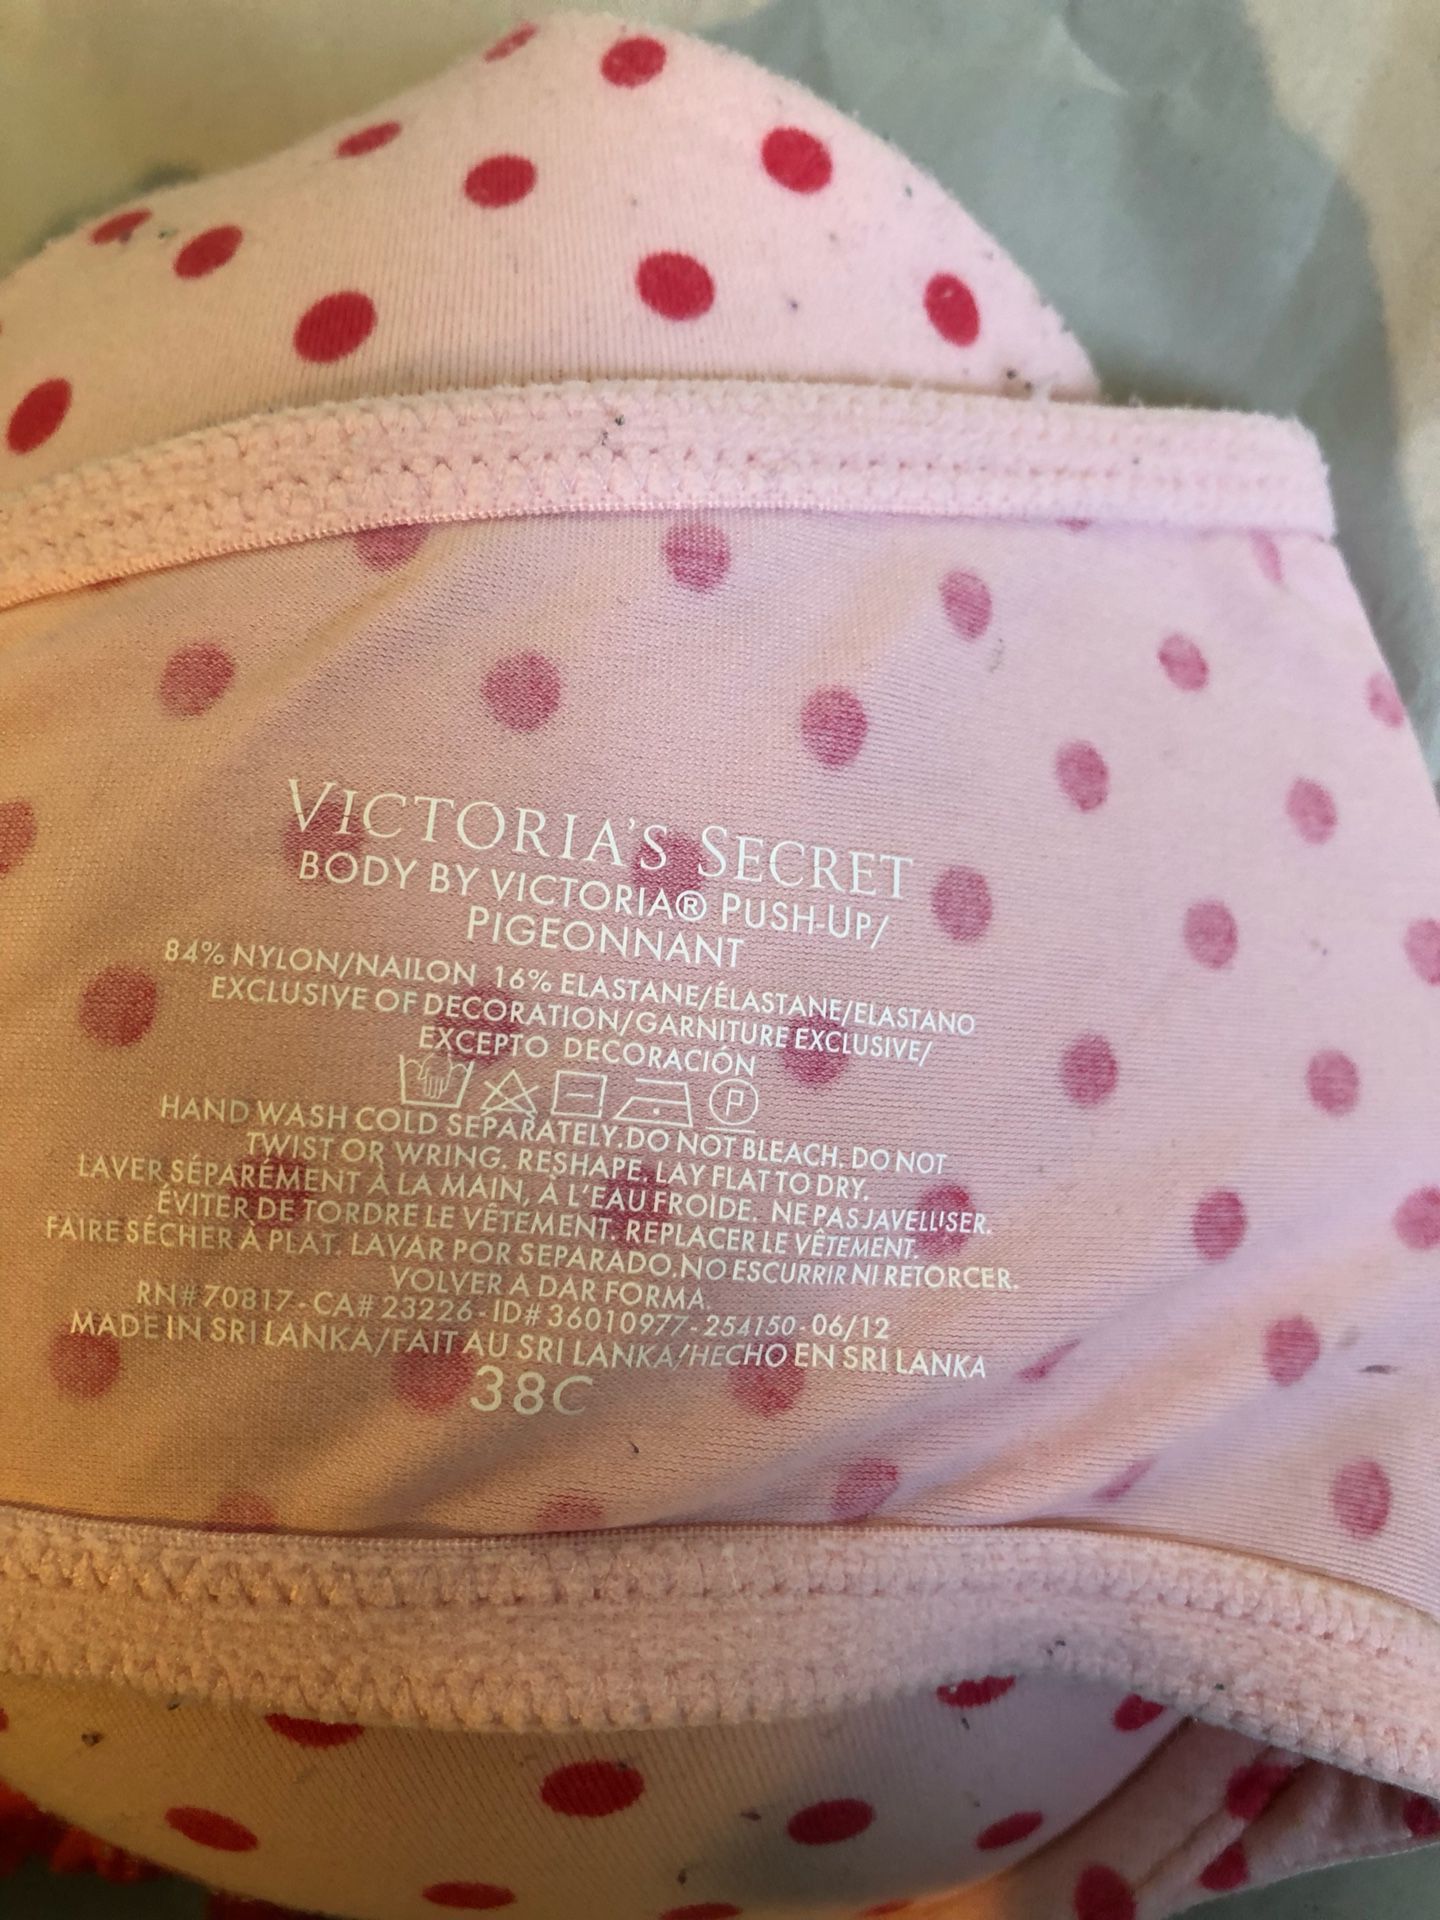 Victoria's Secret Body by Victoria Push-up bra 38C for Sale in Coral